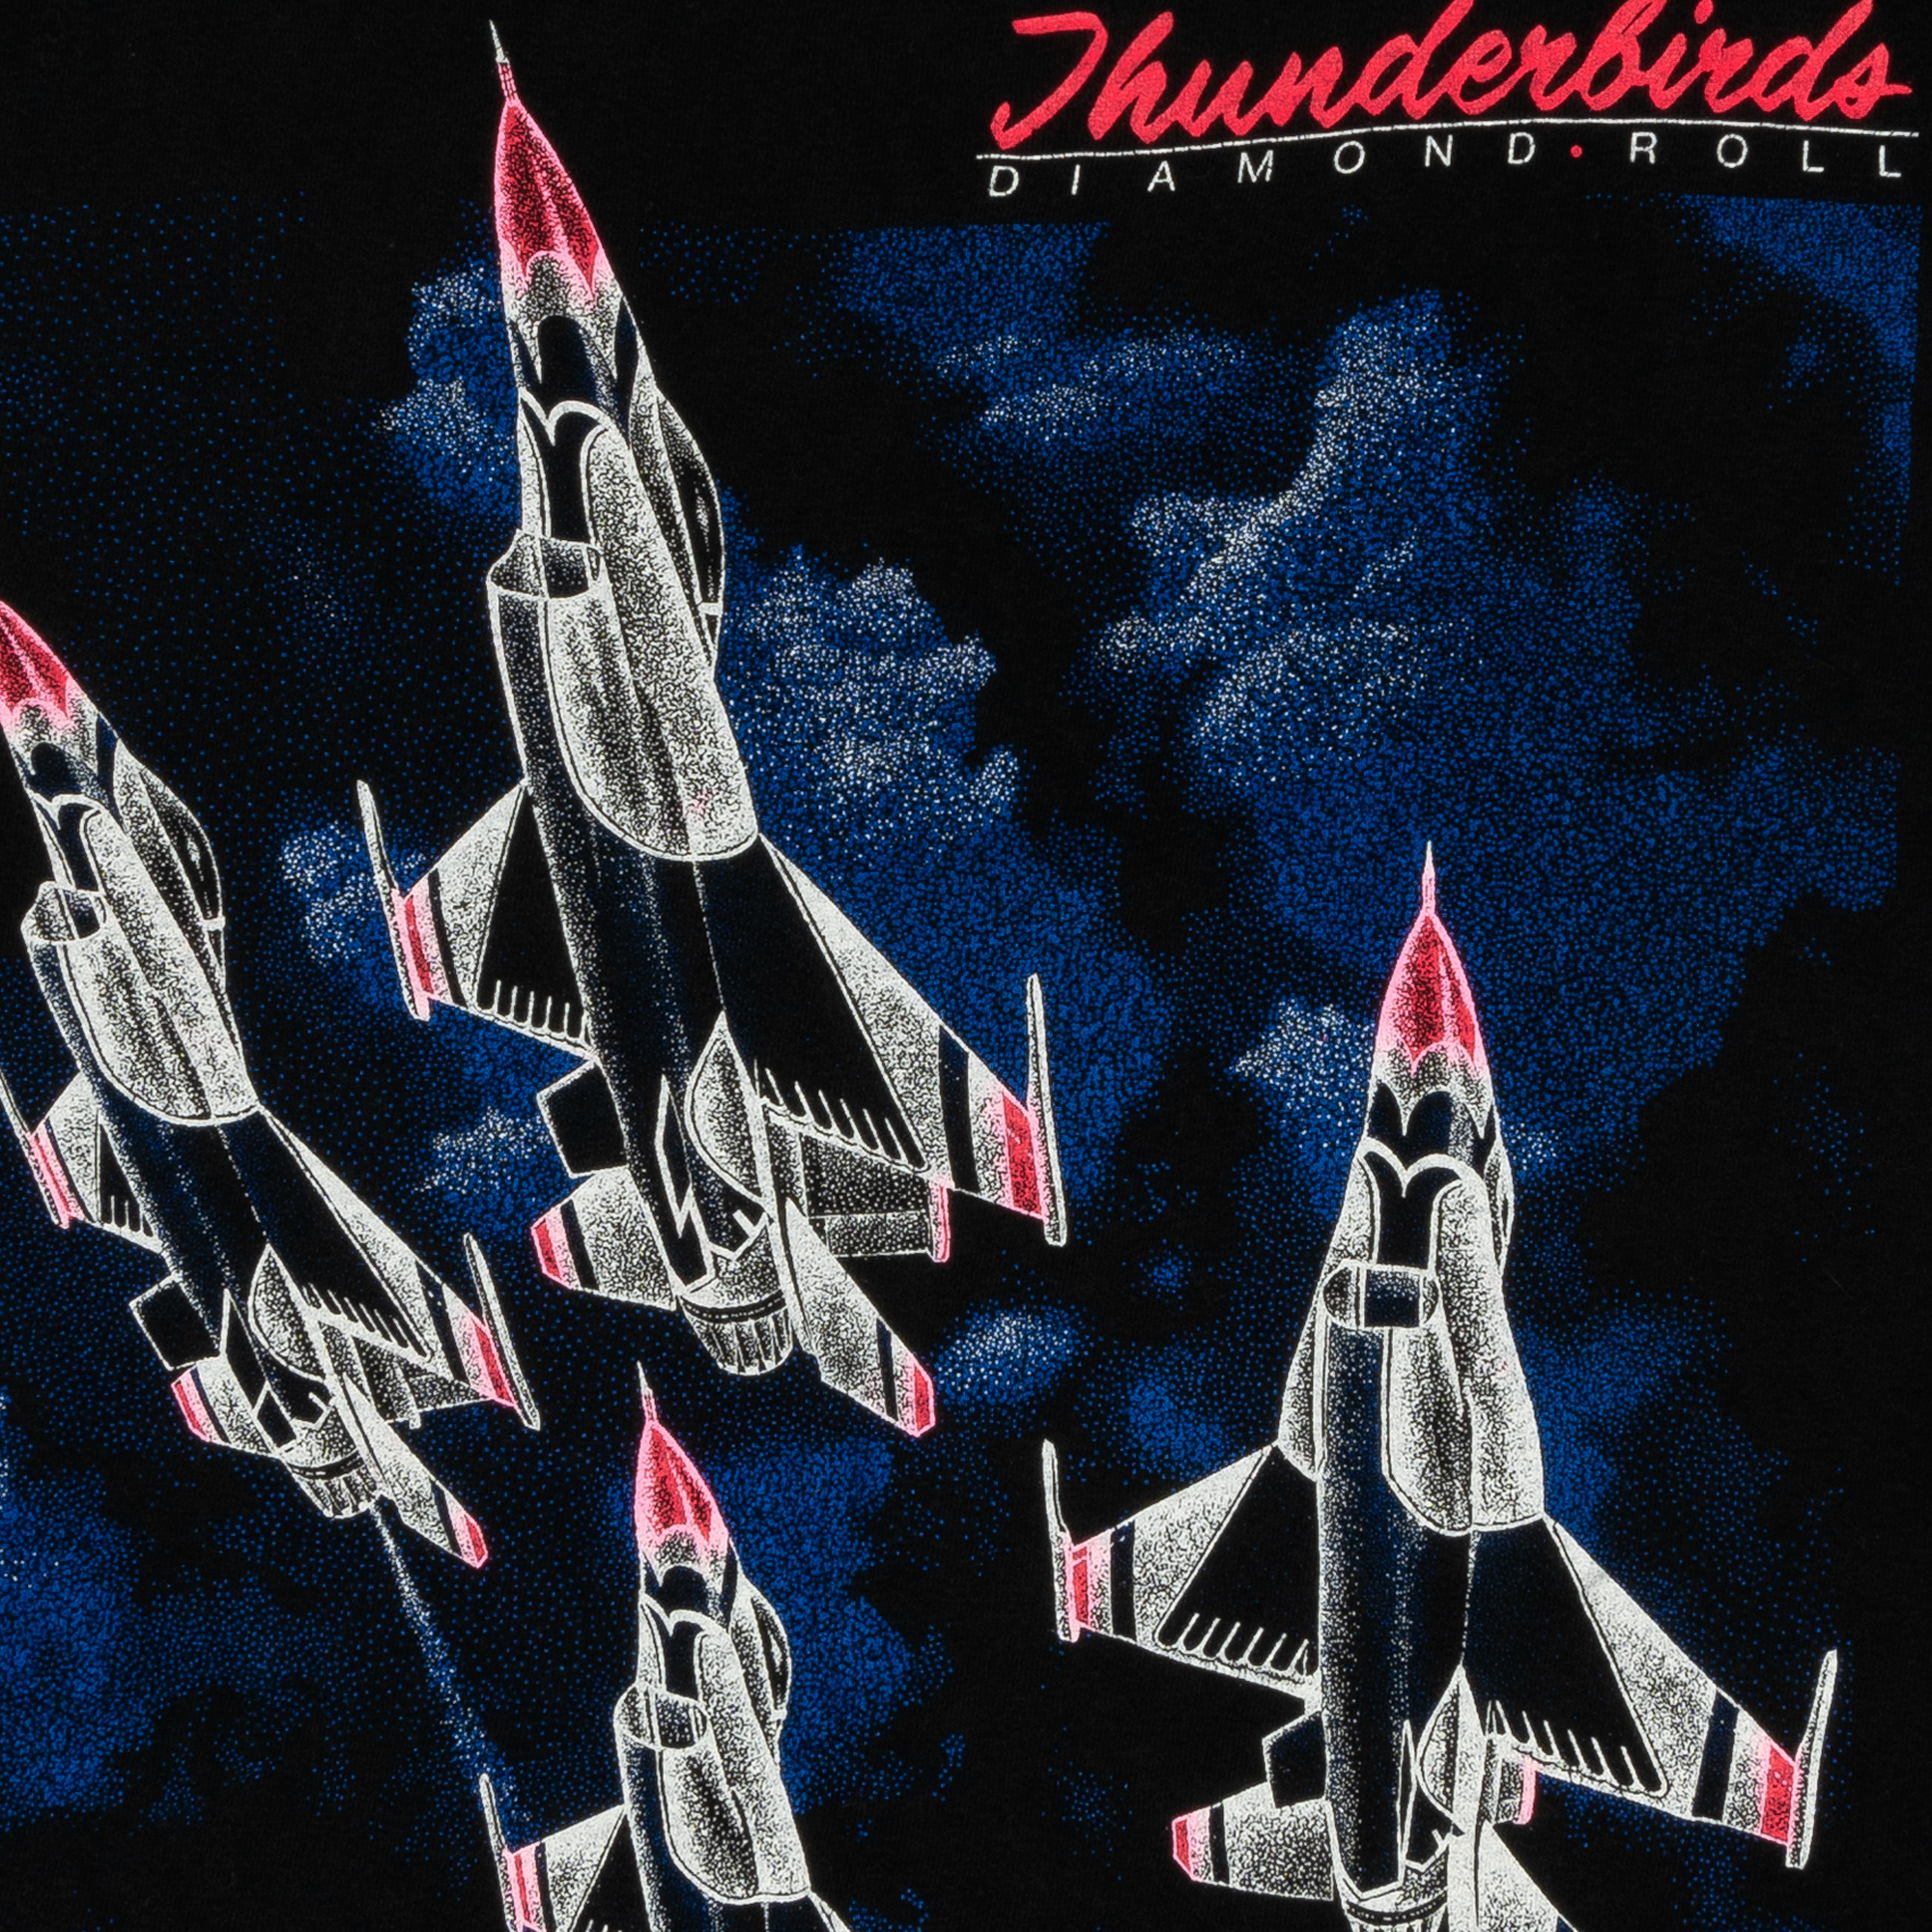 Thunderbirds Diamond Roll 1992 Tee Black-PLUS